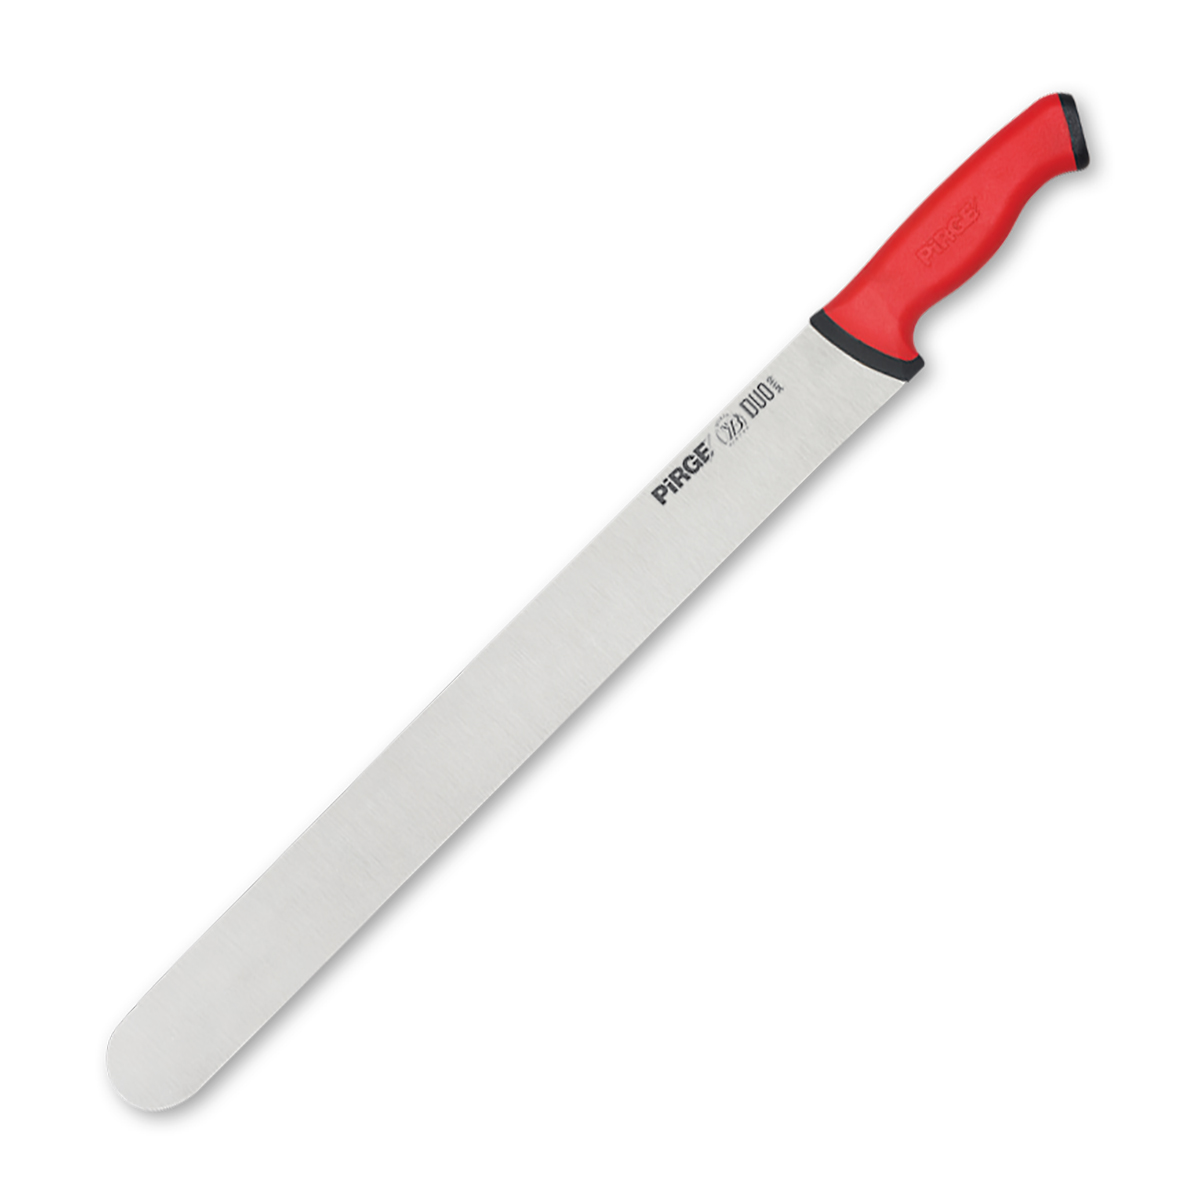 Нож поварской для кебаба 45 см,красная ручка  Pirge